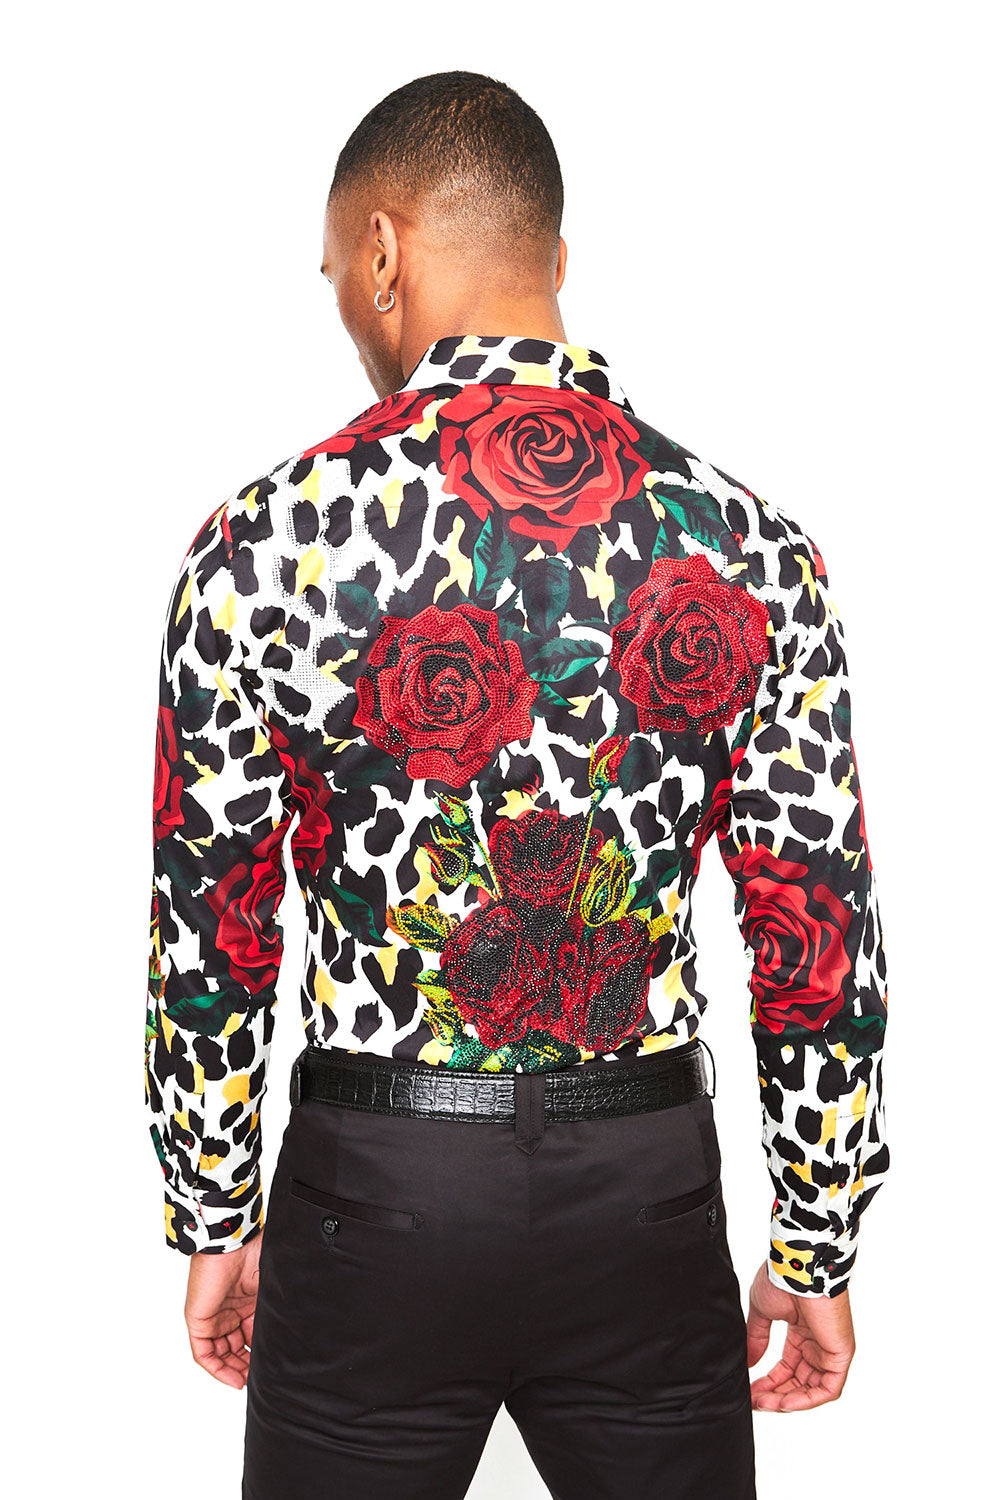 BARABAS men's Rhinestone Floral Roses Leopard Long Sleeve Shirts SPR964